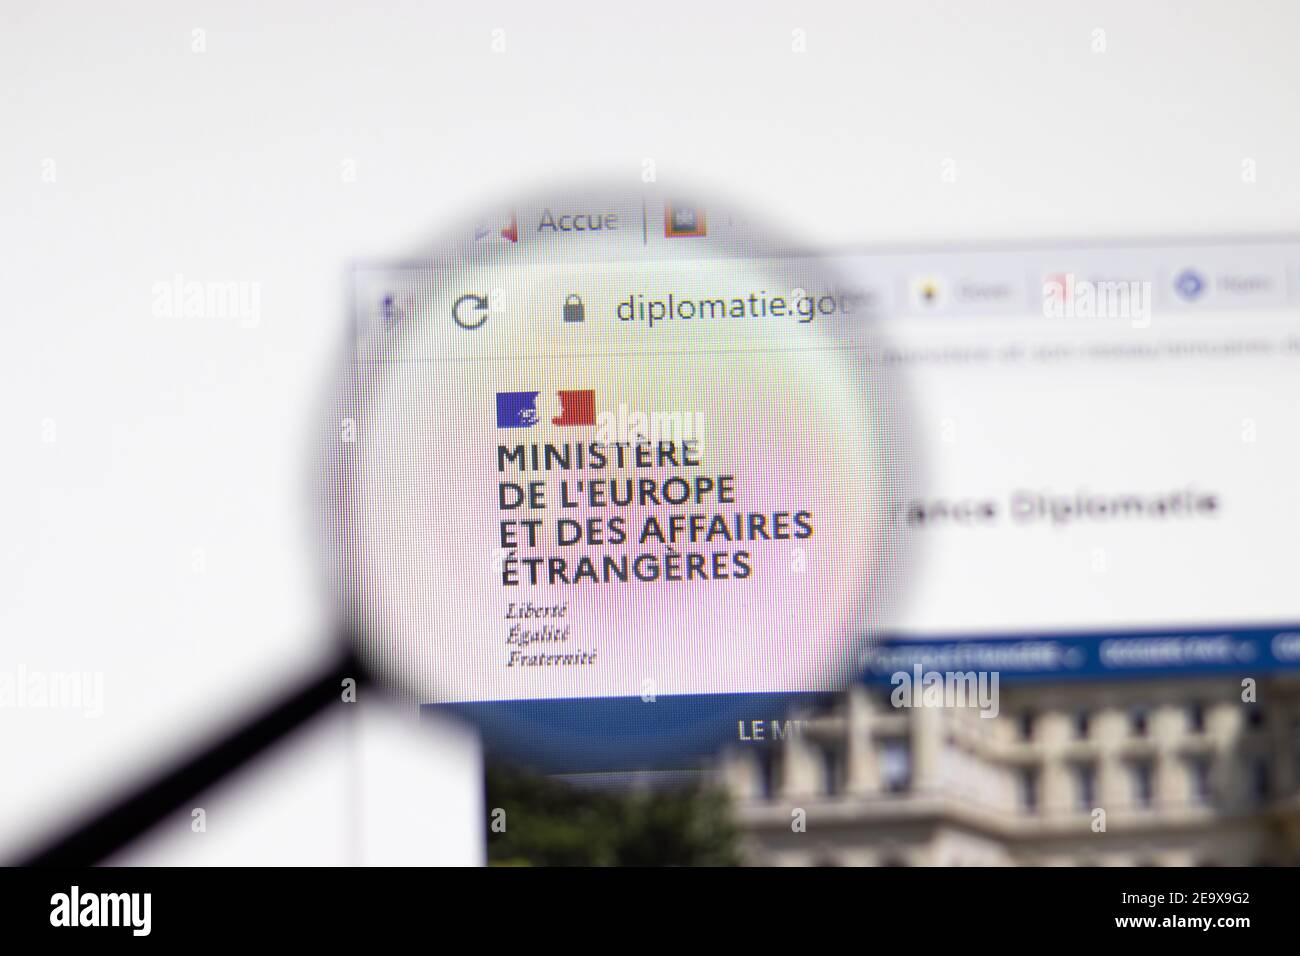 Los Angeles, USA - 1. Februar 2021: France Diplomacy Webseite. diplomatie.gouv.fr Logo auf dem Display, illustrative Editorial Stockfoto